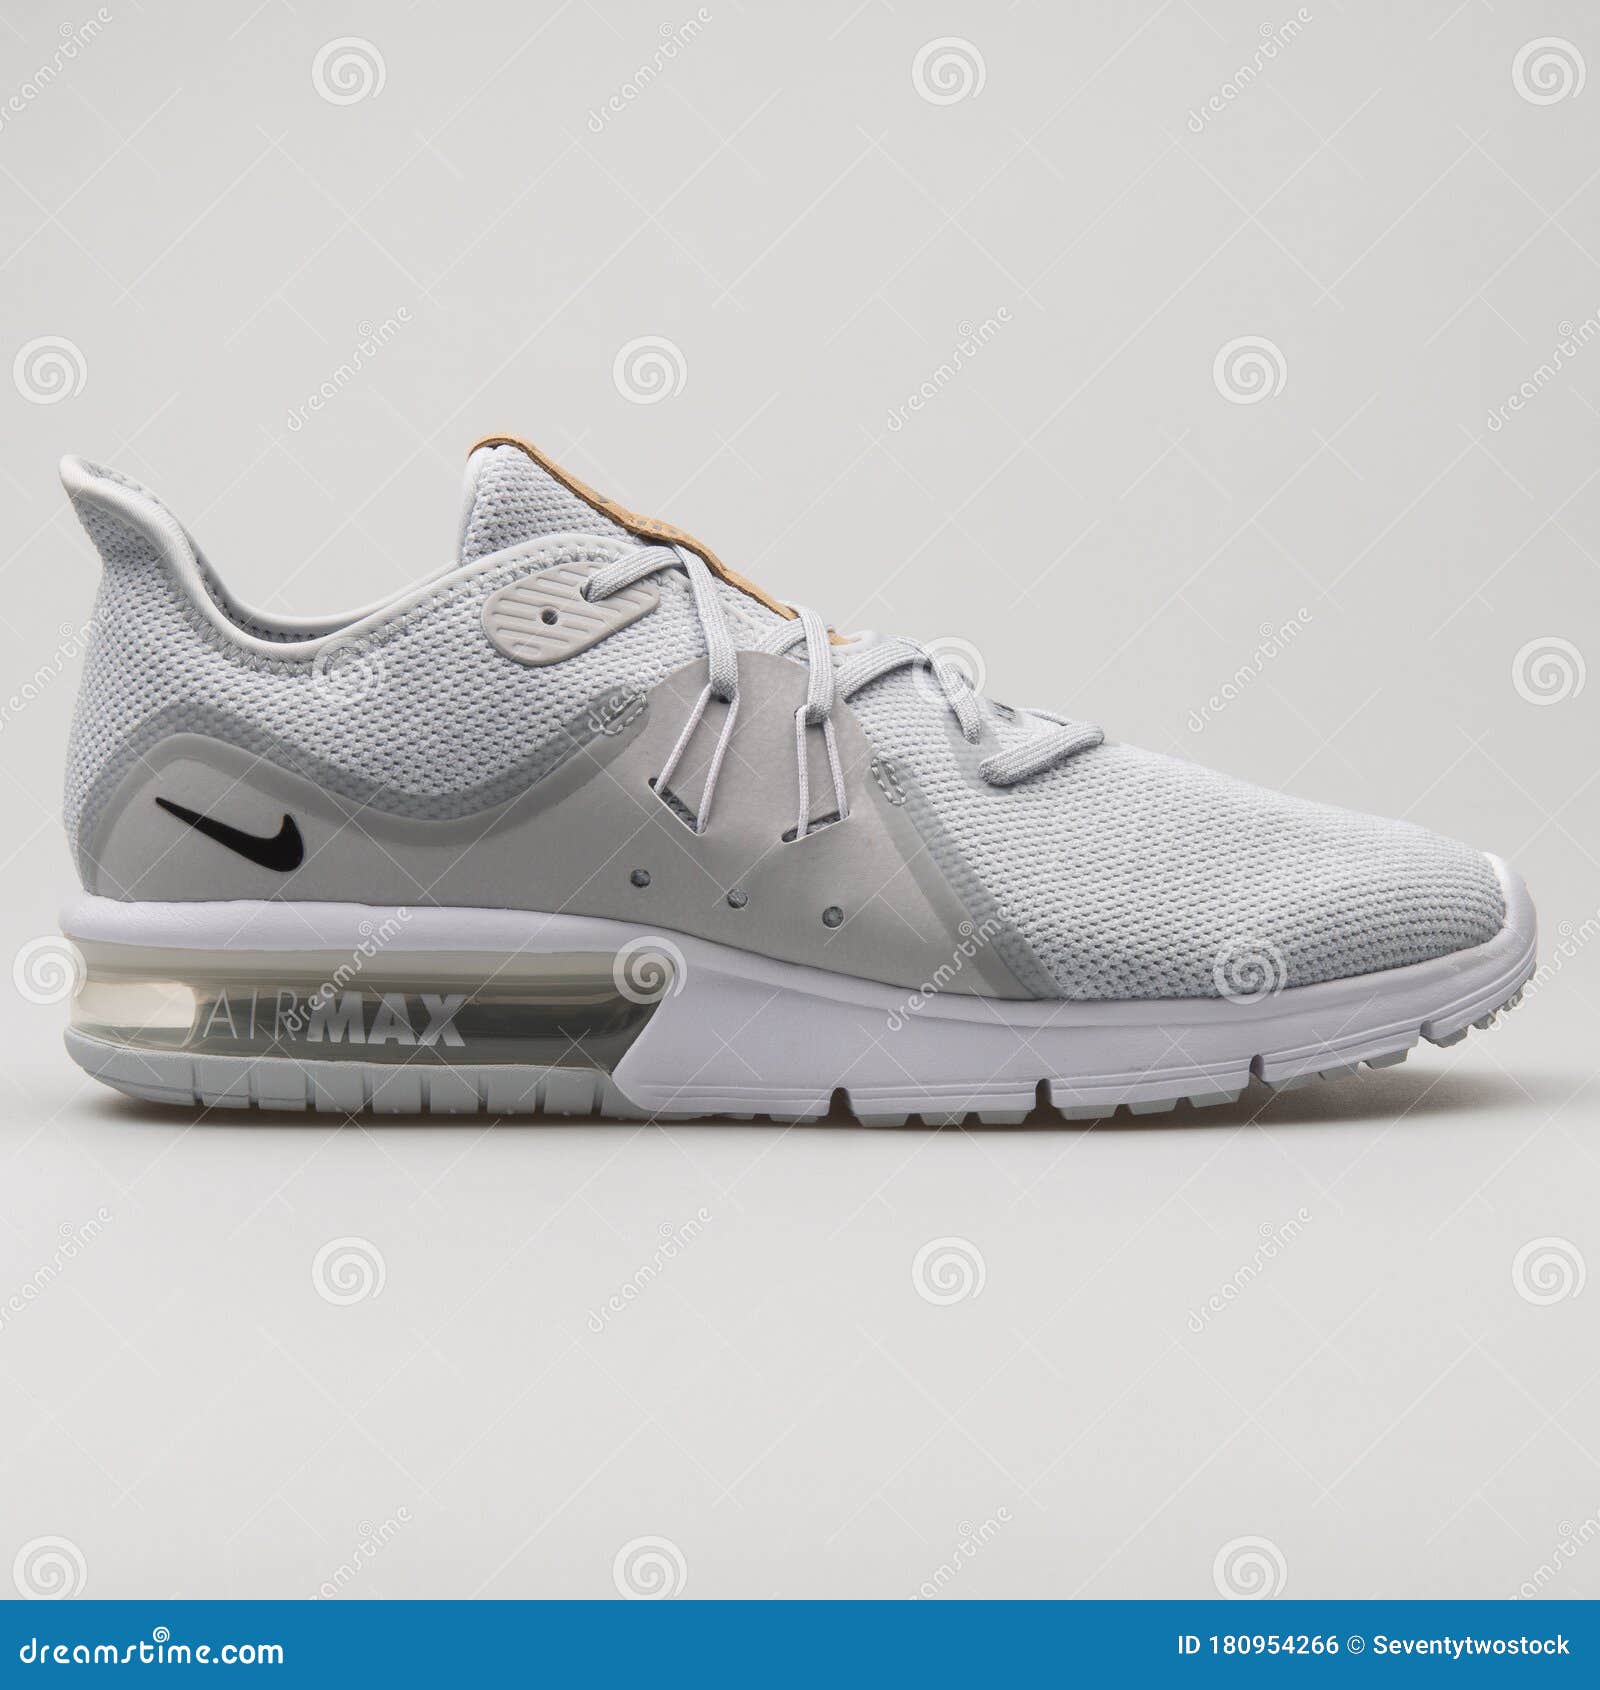 Nike Air Max Sequent 3 Platinum White Sneaker Editorial Photo - of shoe, kicks: 180954266